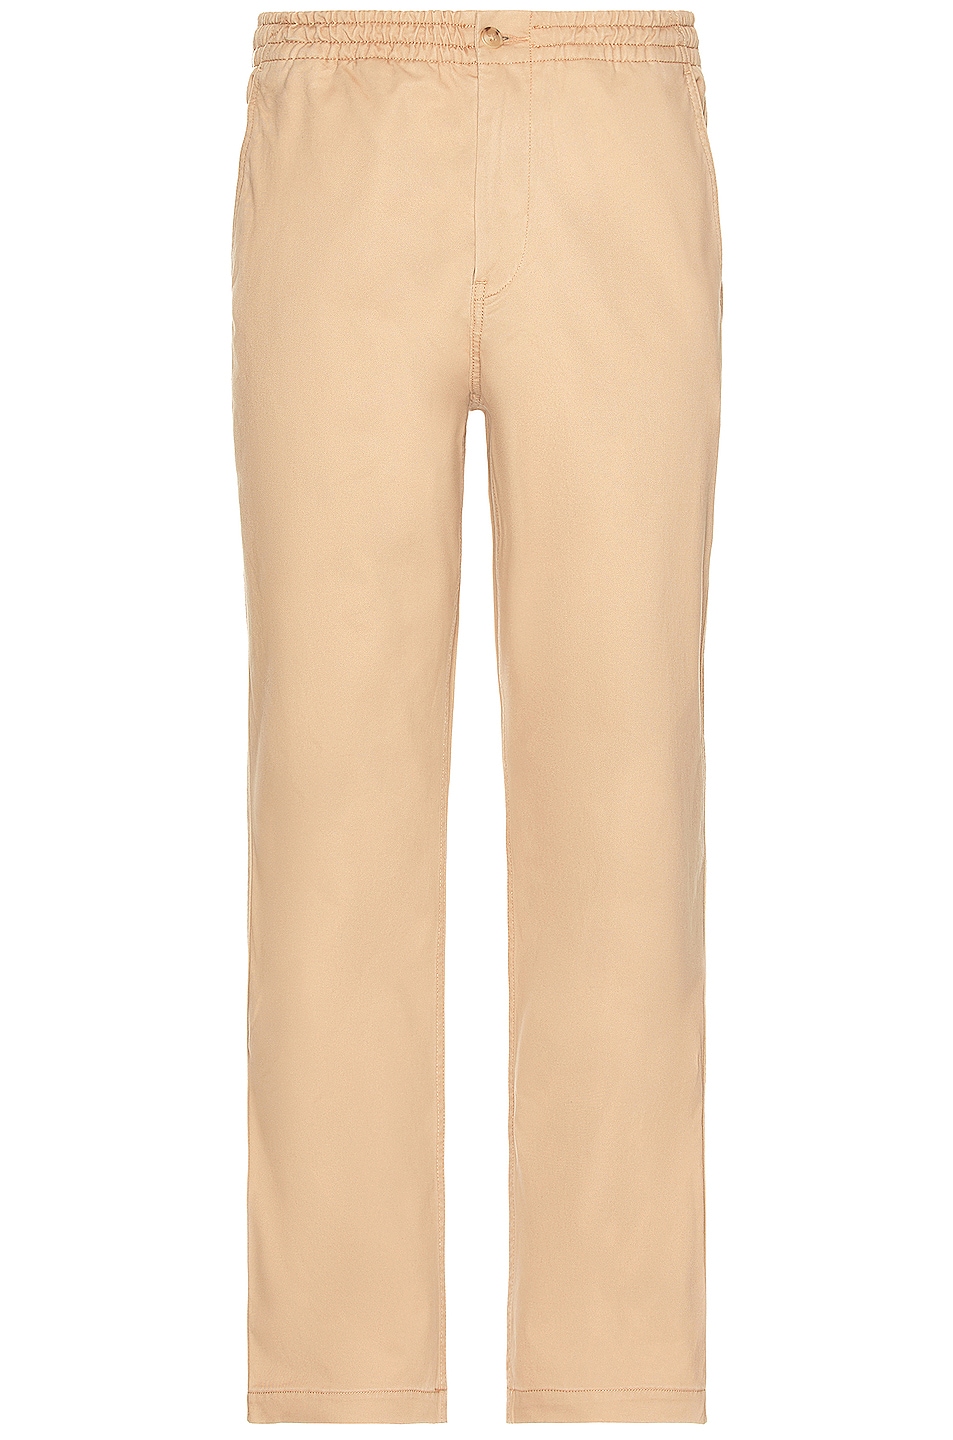 Image 1 of Polo Ralph Lauren Flat Pants in Vintage Khaki